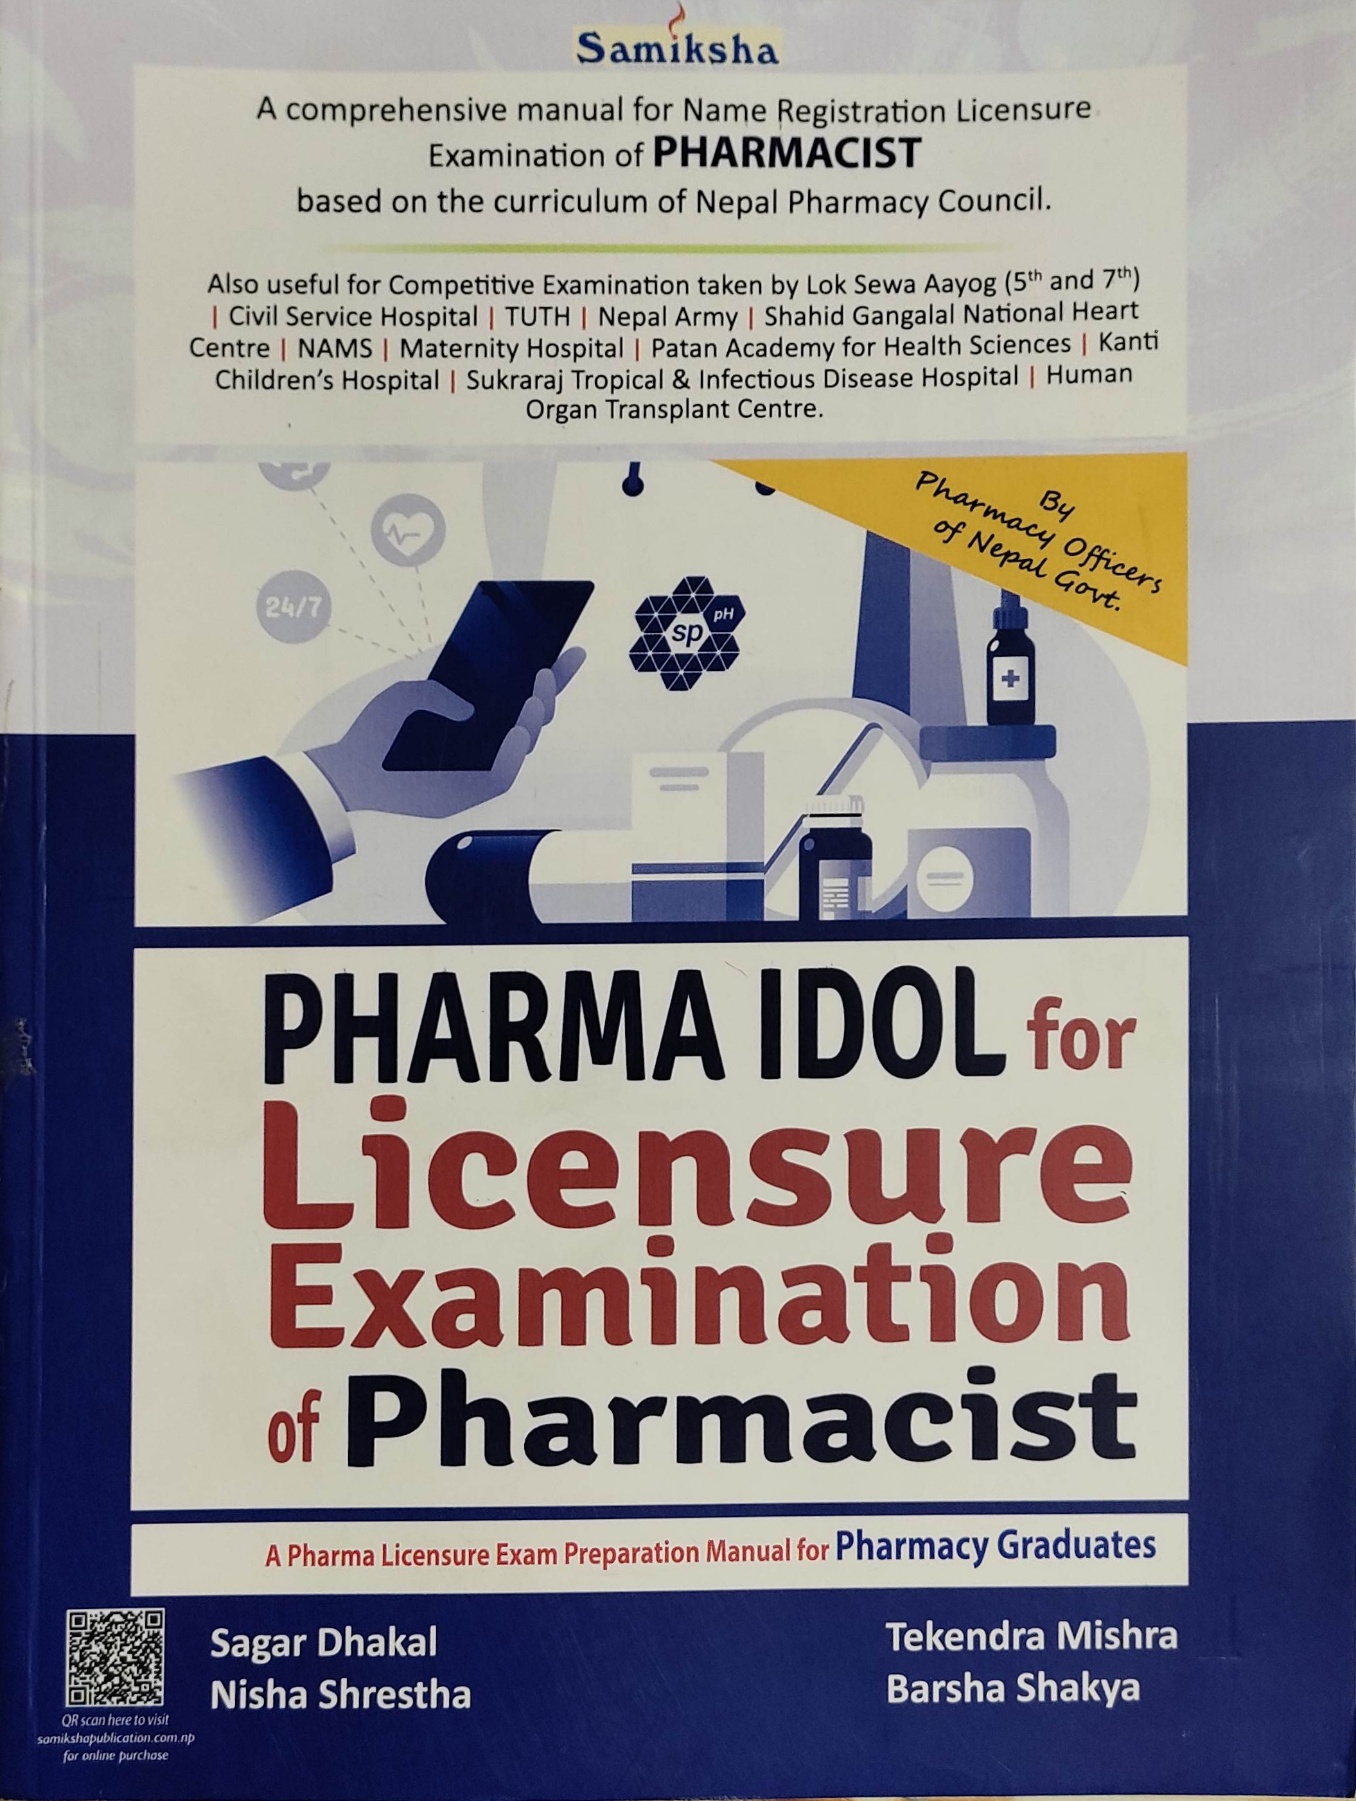 Pharma IDOL for Licensure Examination of Pharmacist